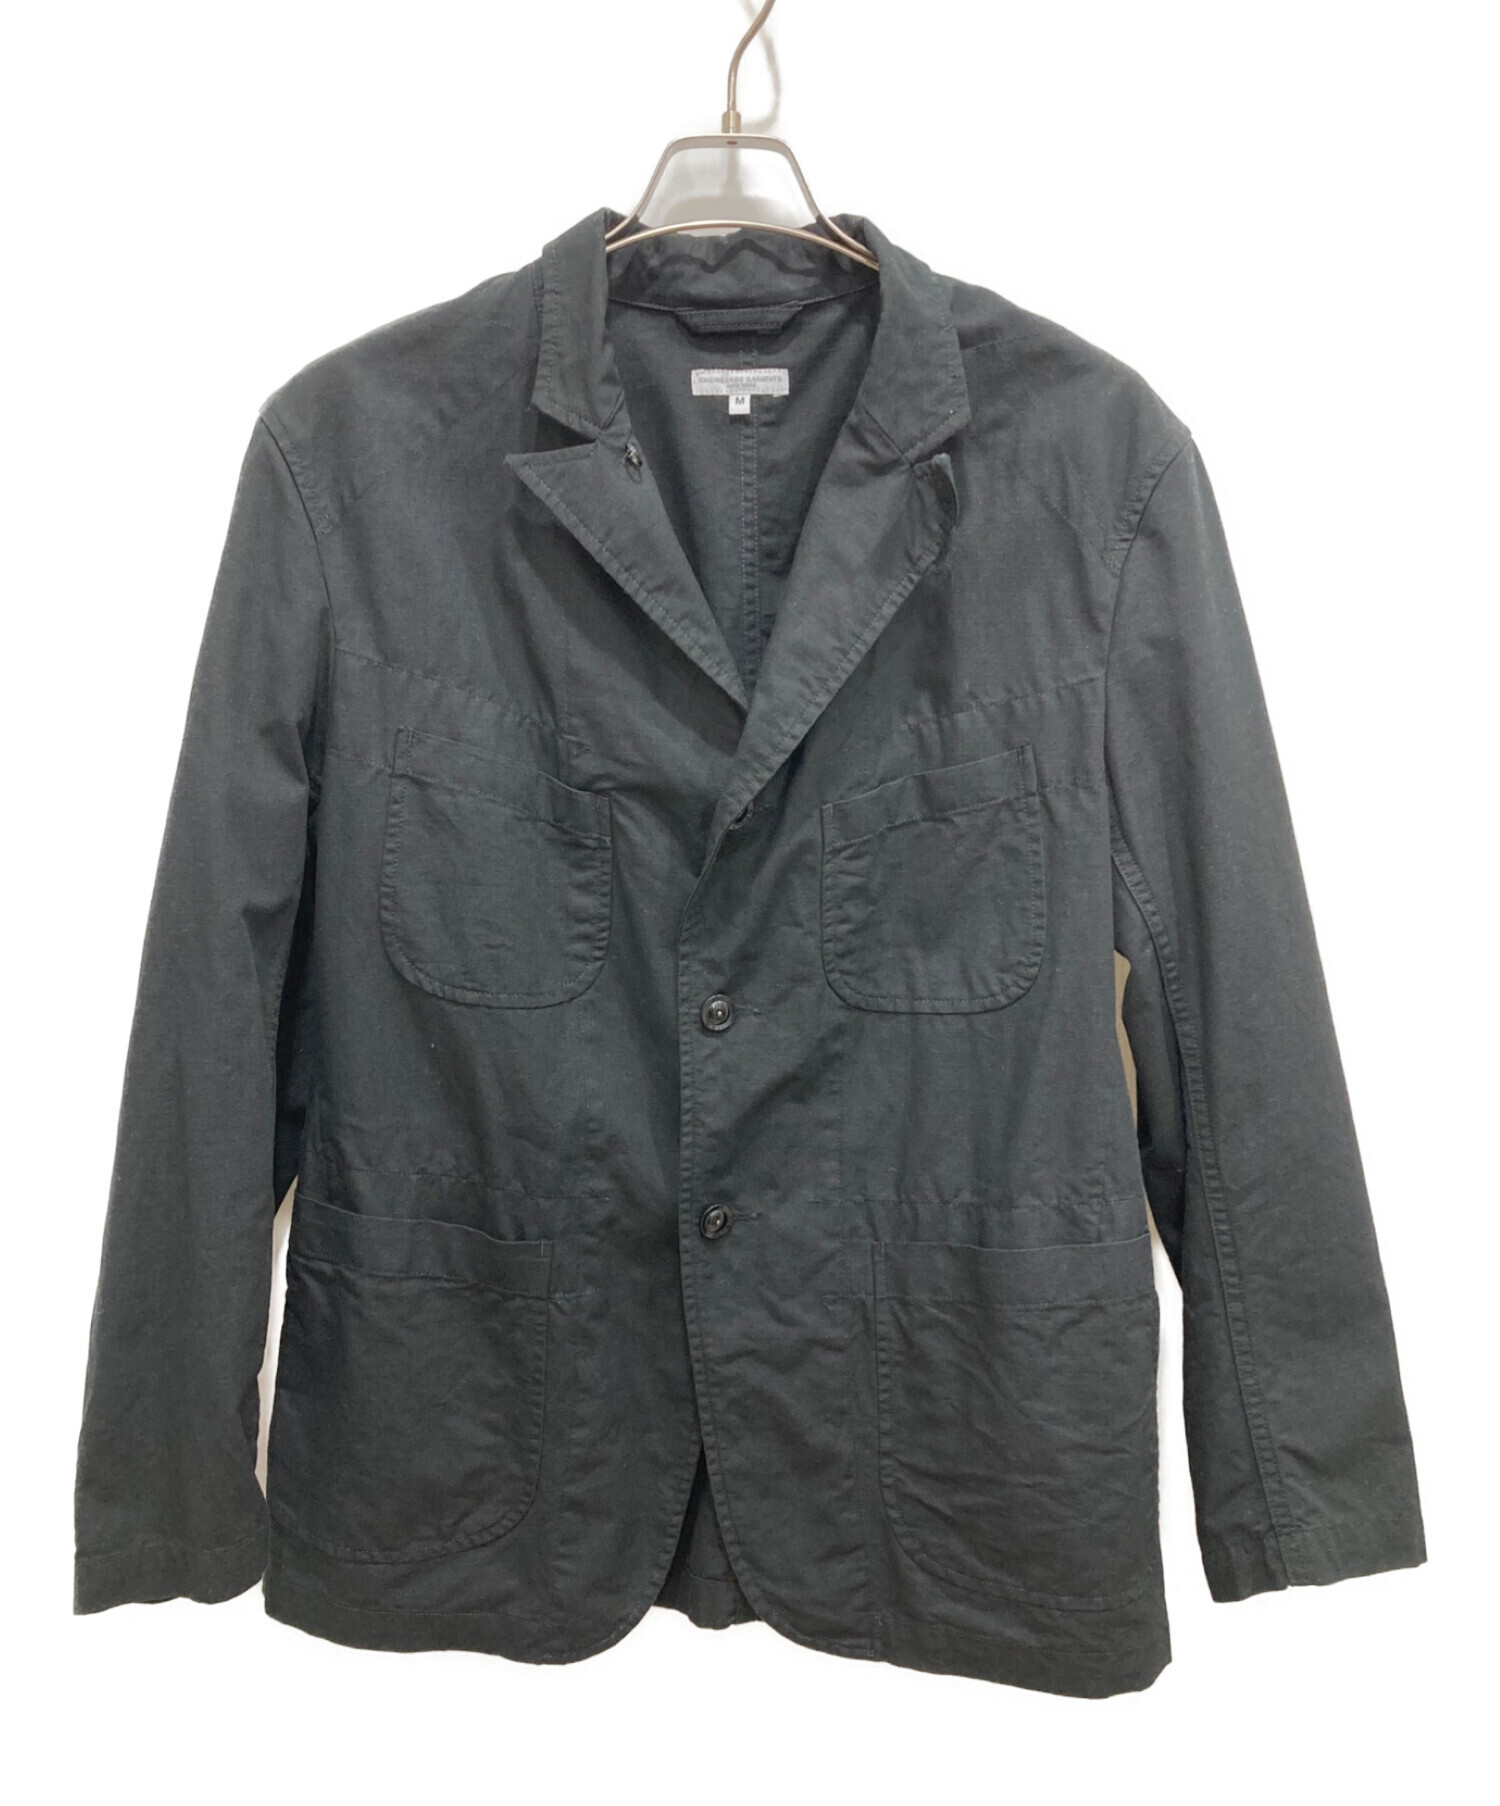 Mサイズ Engineered Garments Bedford Jacket